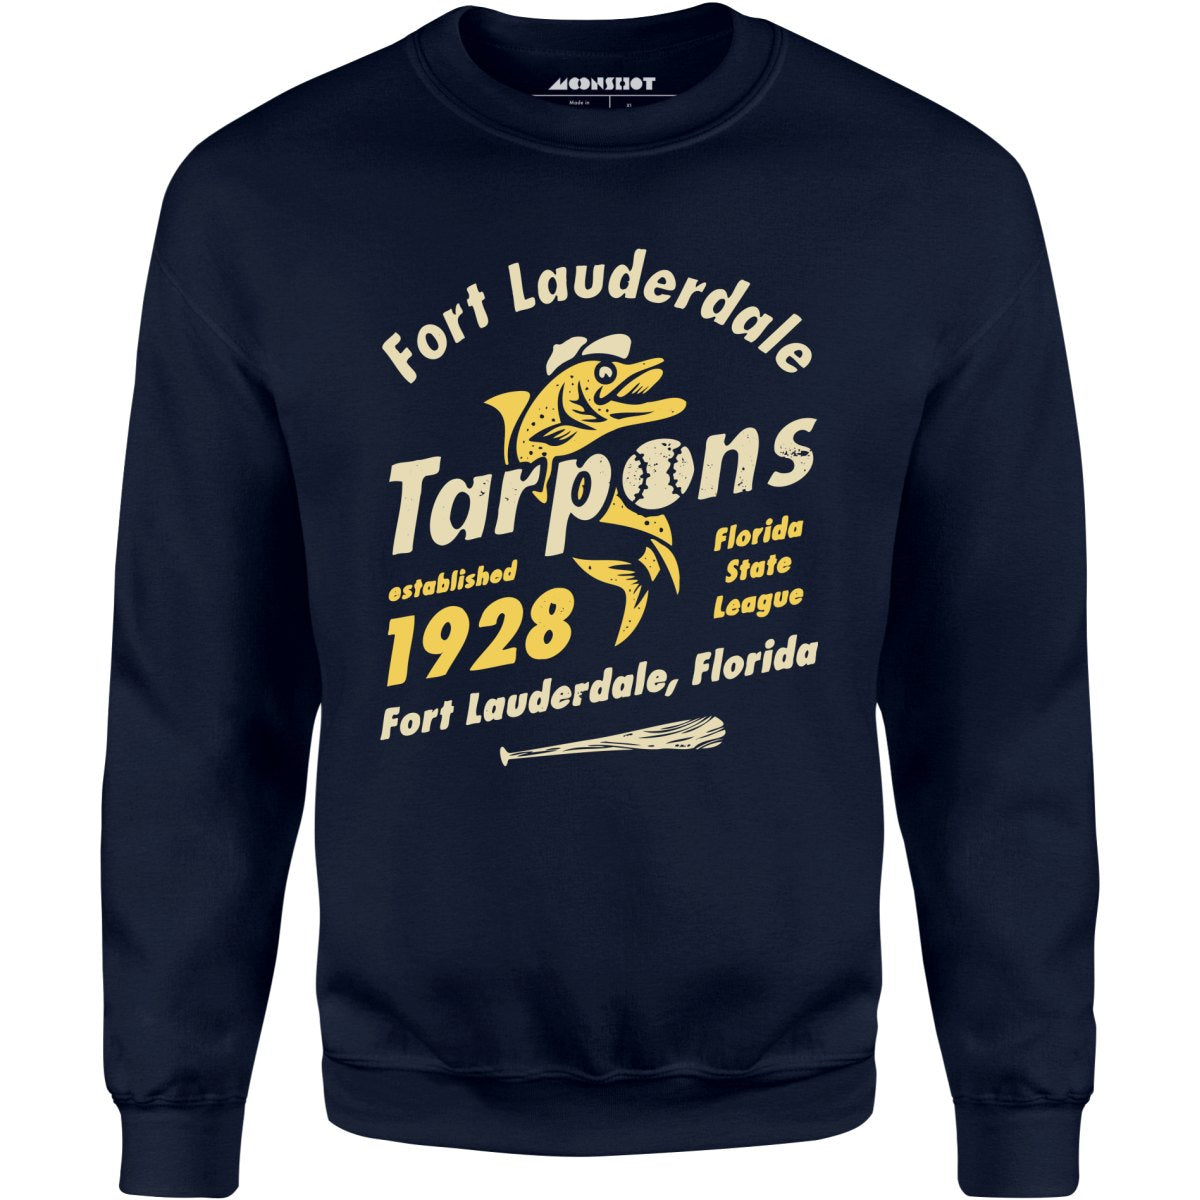 Fort Lauderdale Tarpons - Florida - Vintage Defunct Baseball Teams - Unisex Sweatshirt